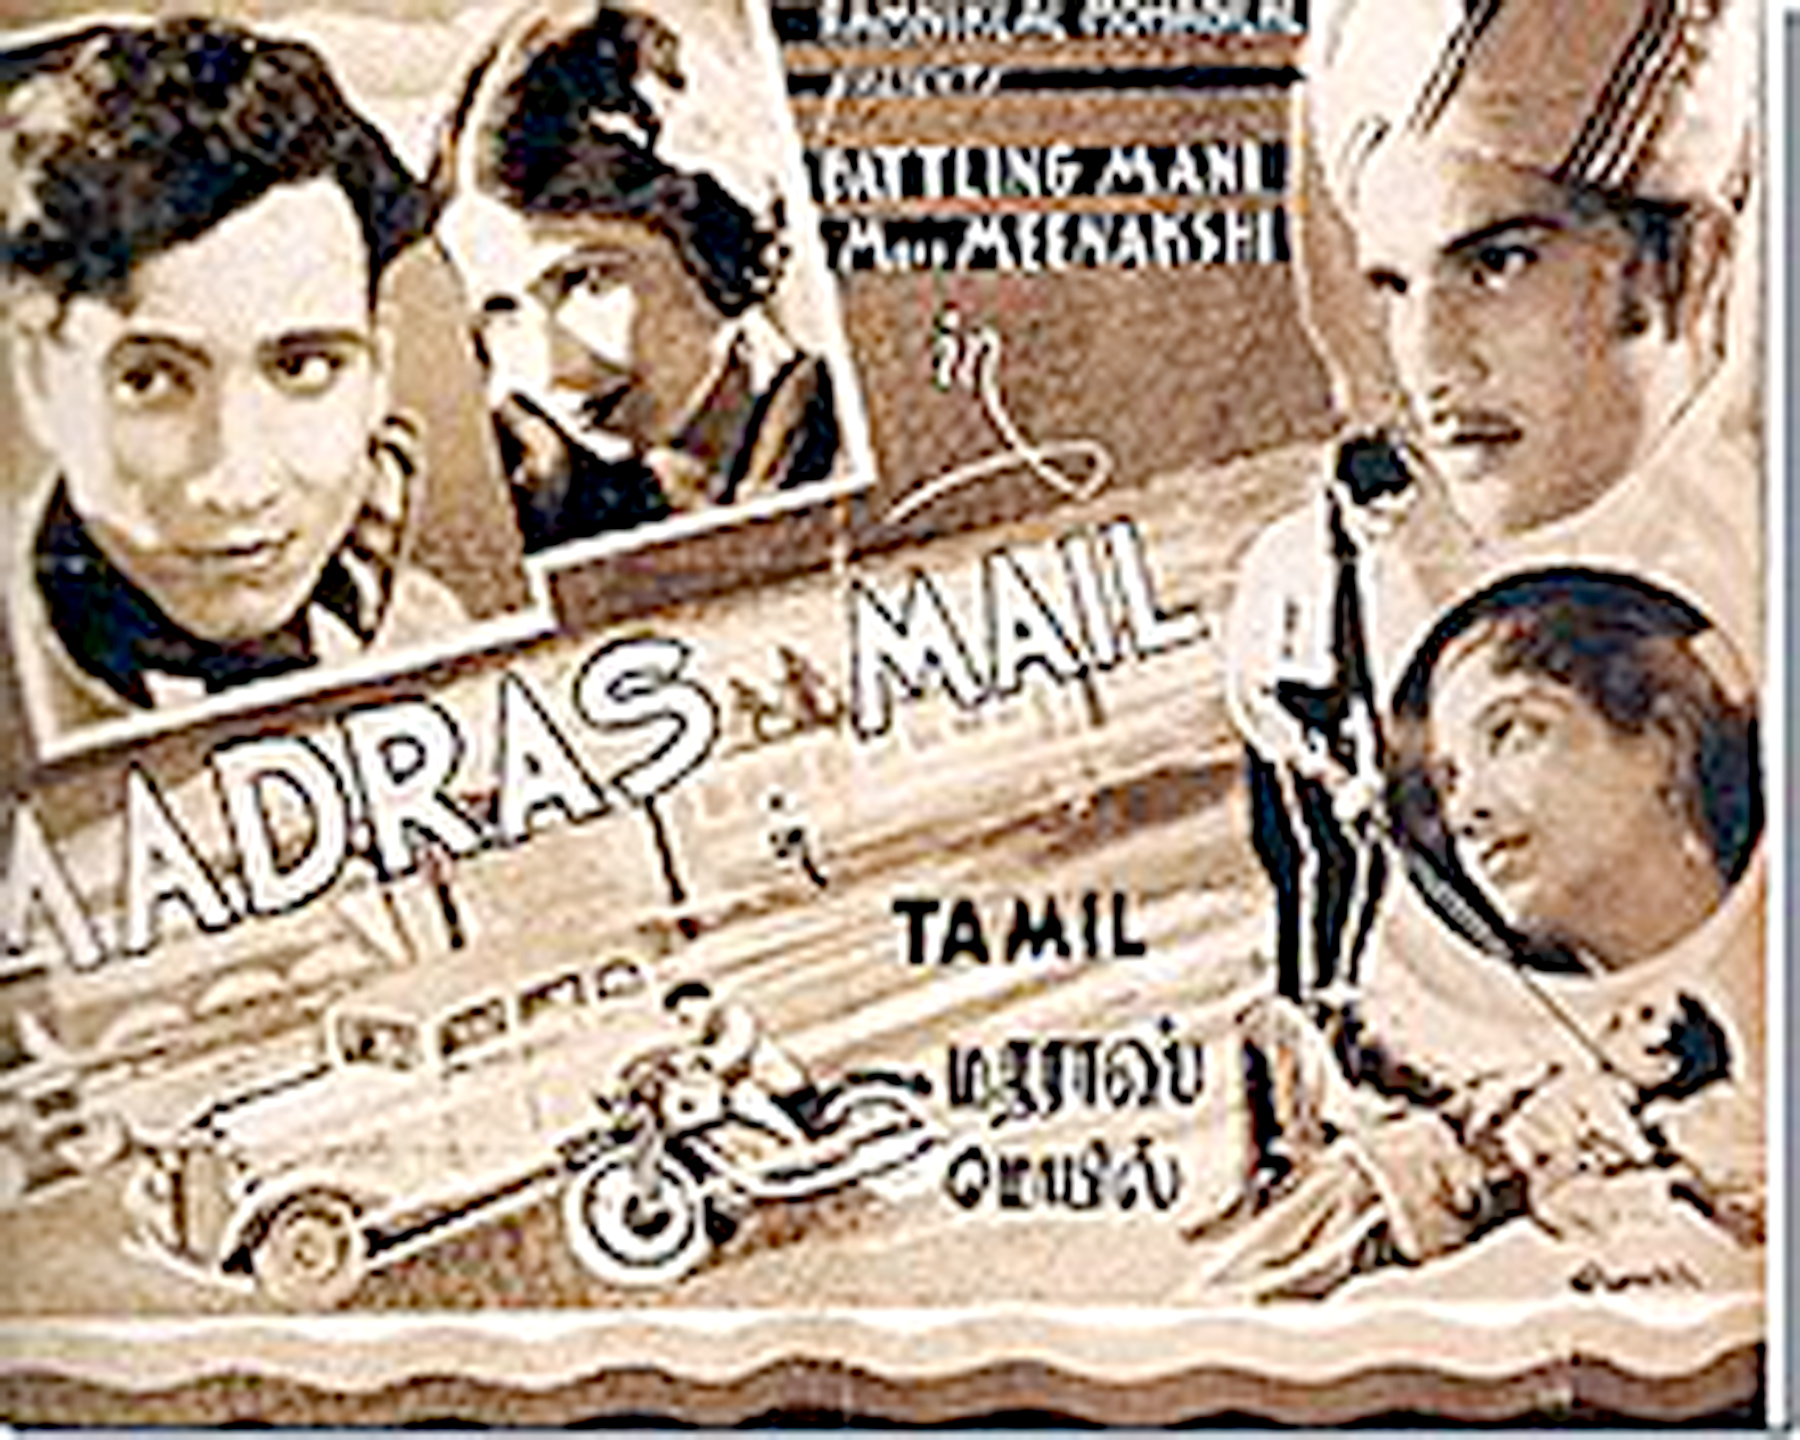 Madras Mail